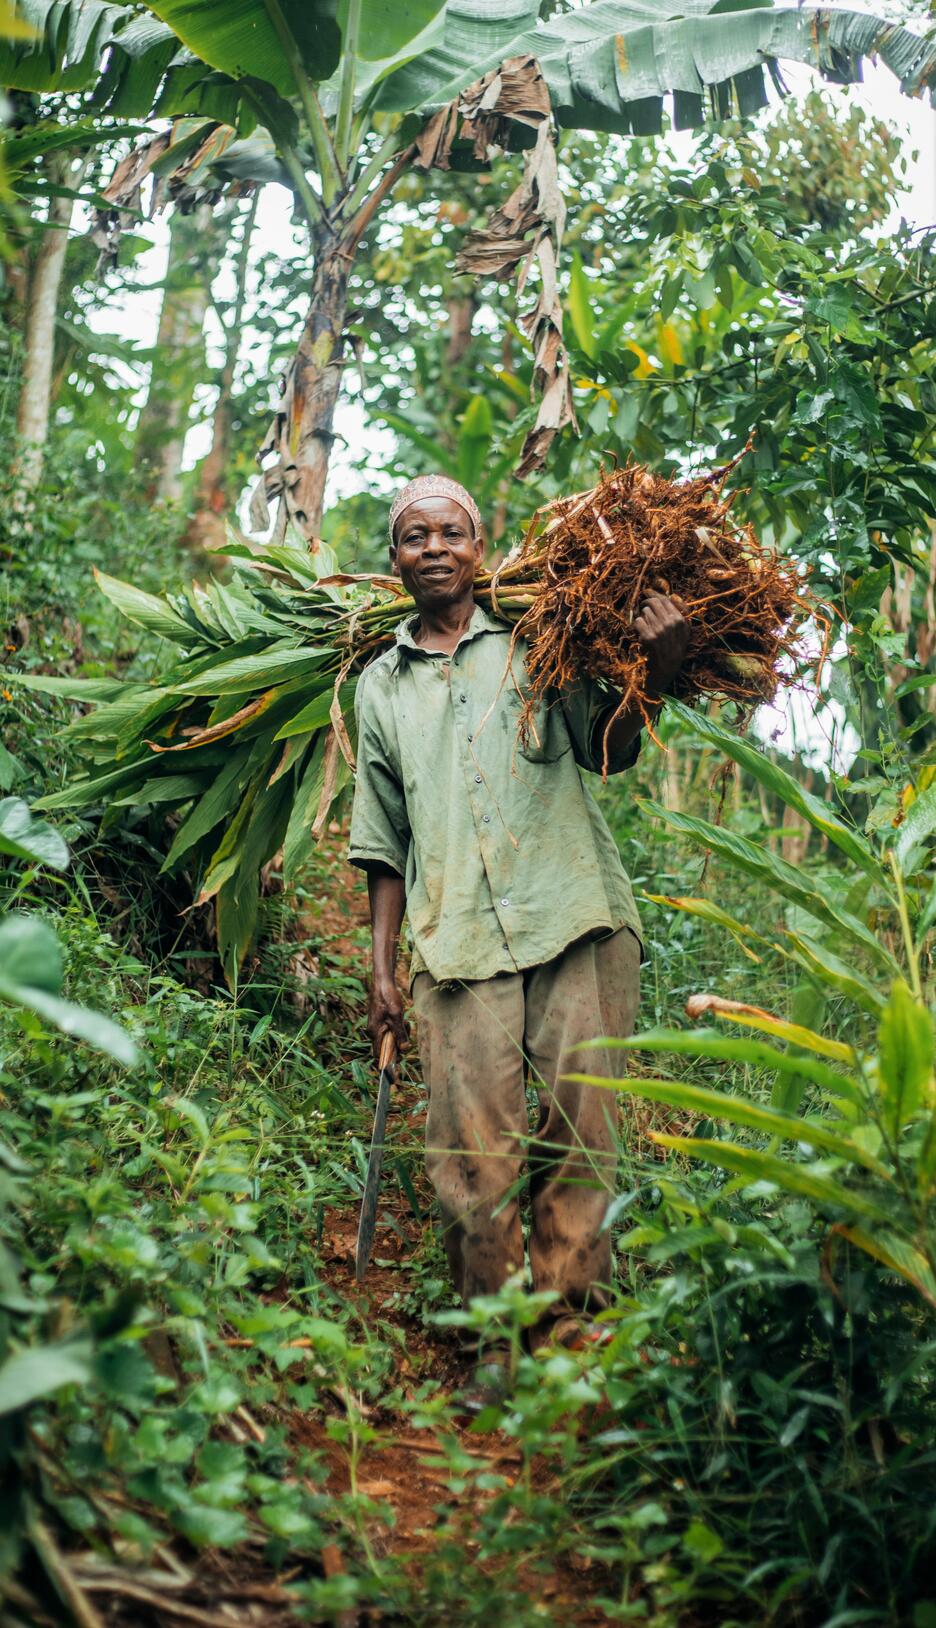 Tanzania - Man carrying cardamom plants to replant